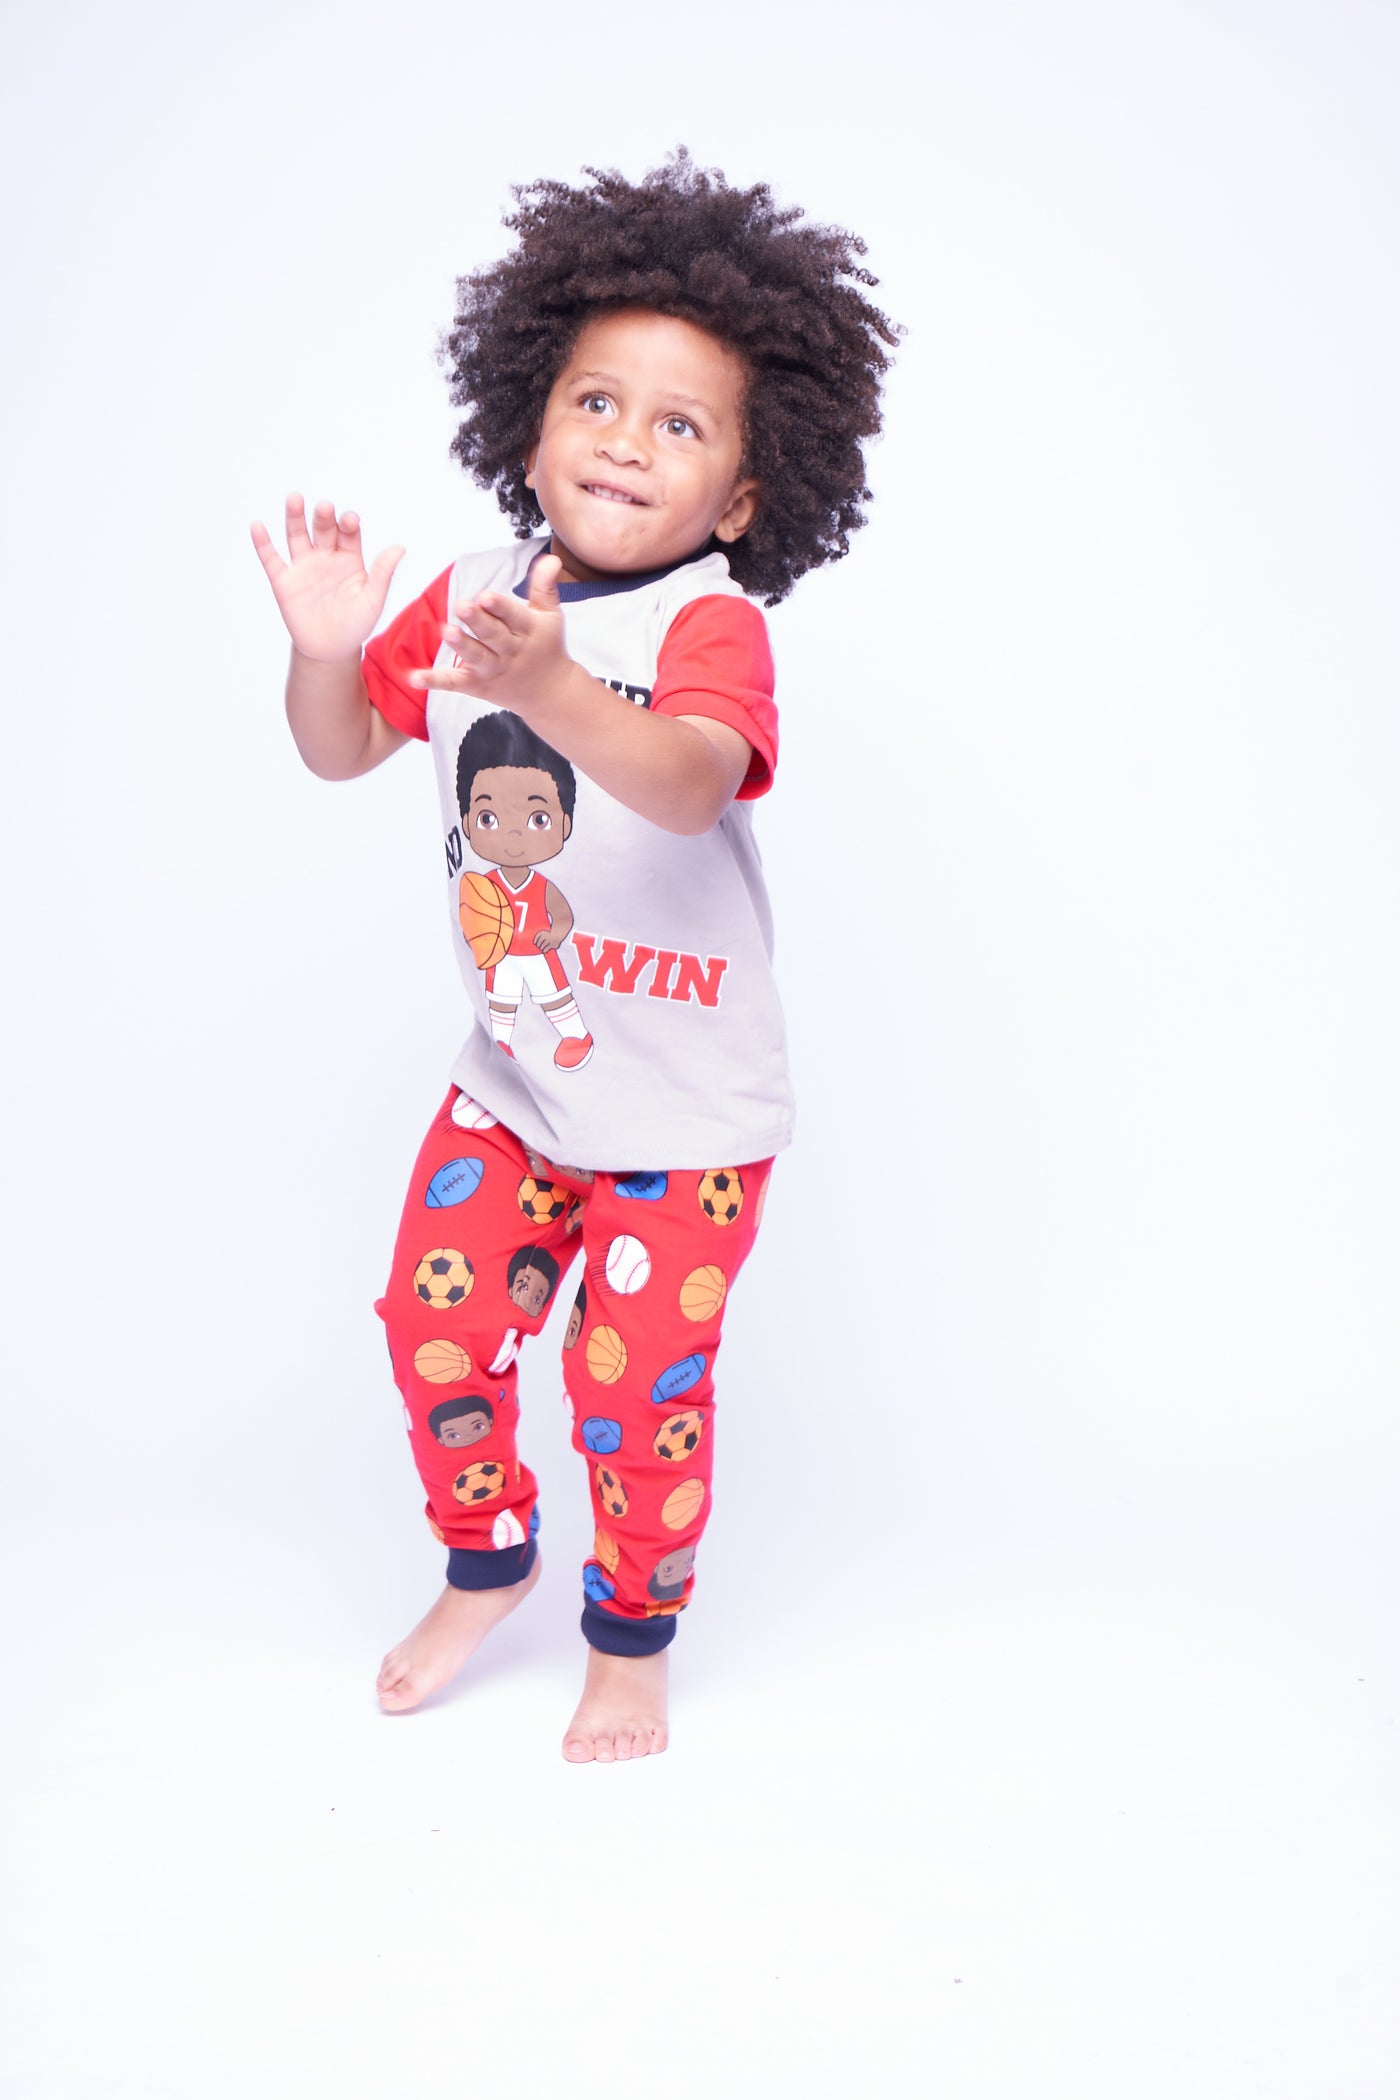 Wake Up & Win Sports Kids Boys Pajama 2 pc set size Toddler 2T - 14